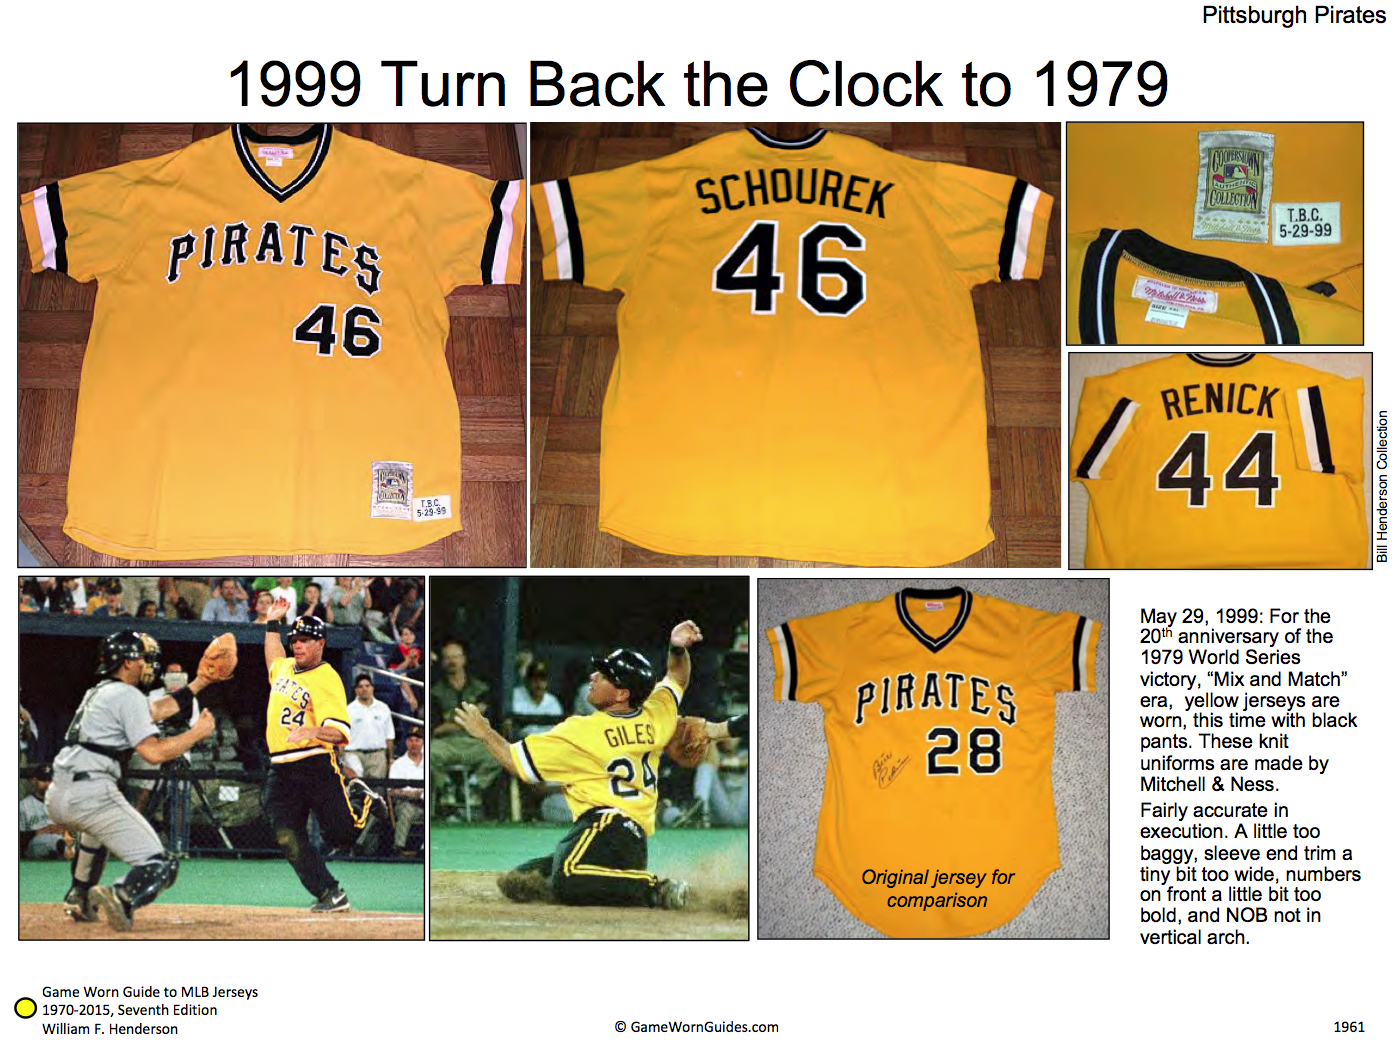 Rumor] Pirates to bring back 70s throwback uniforms for 2016 season to  replace Sunday Alternates. : r/baseball